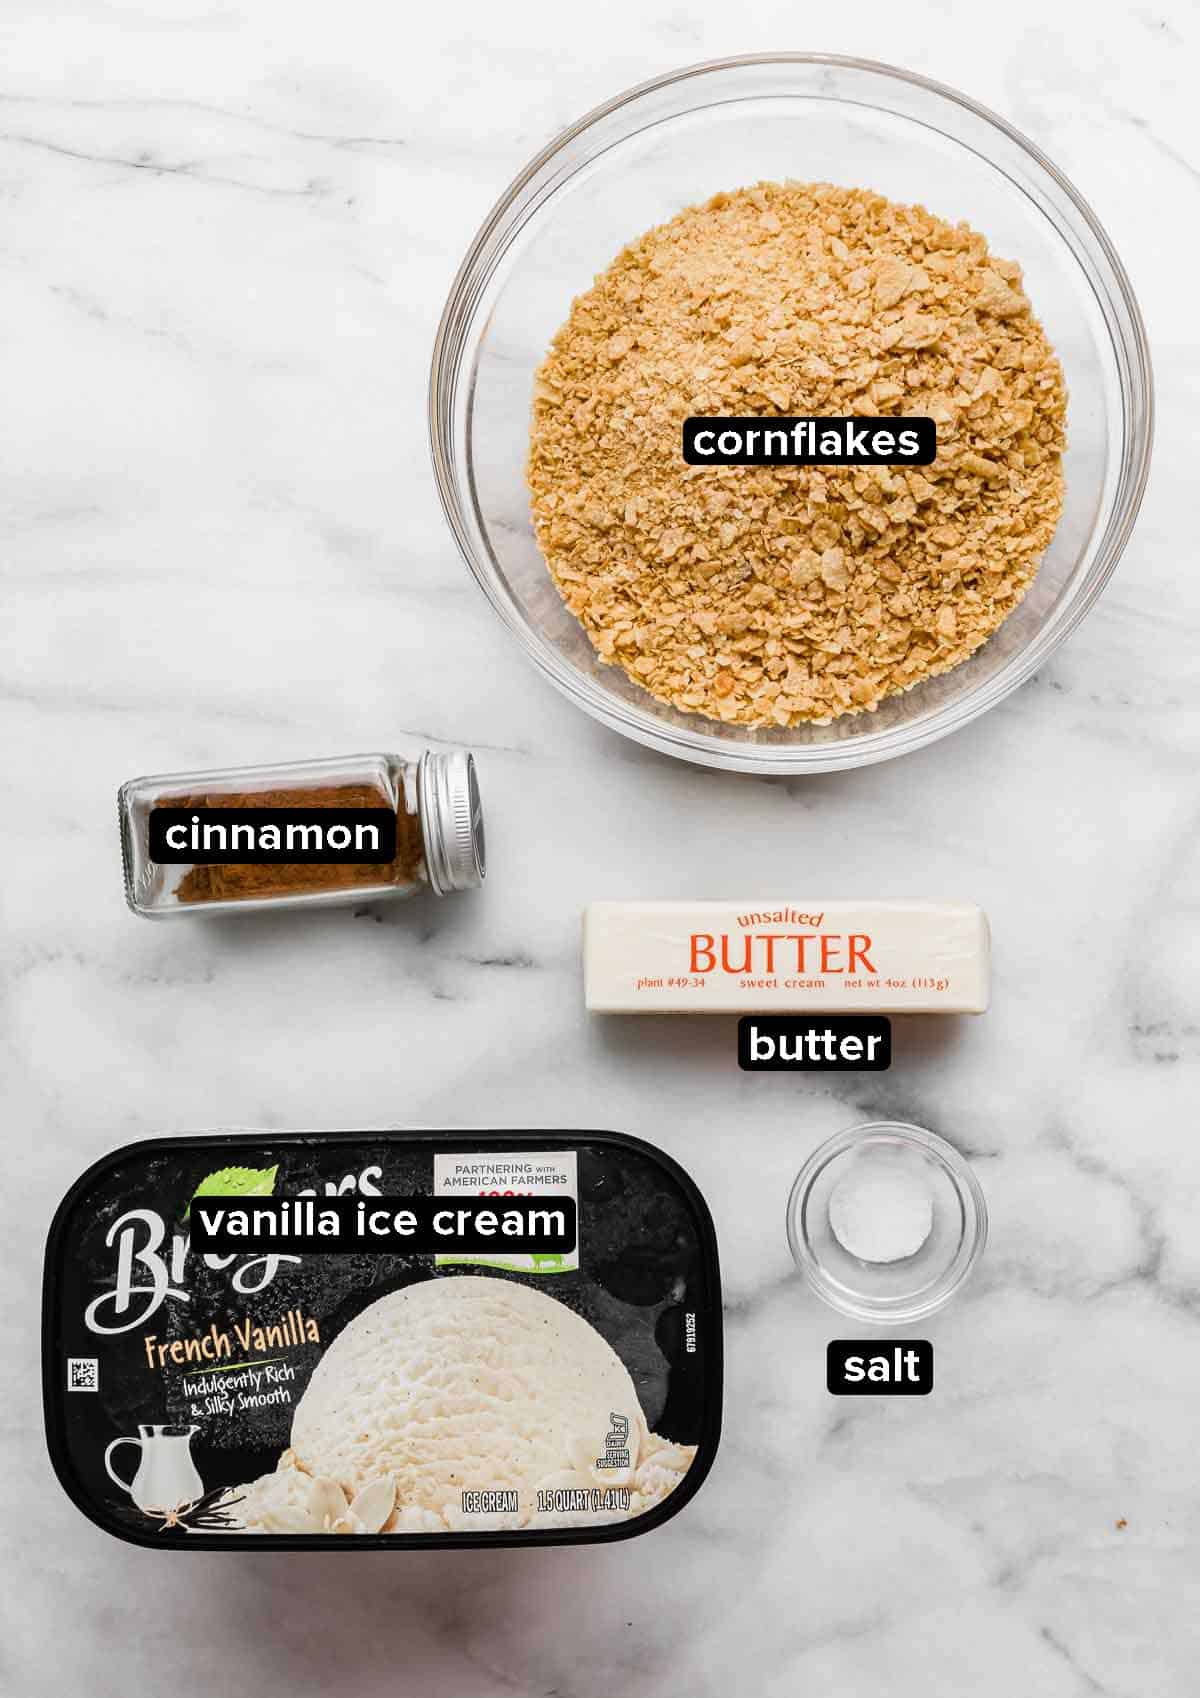 Fried ice cream ingredients on a white background: vanilla ice cream, cornflakes, cinnamon, butter, salt.